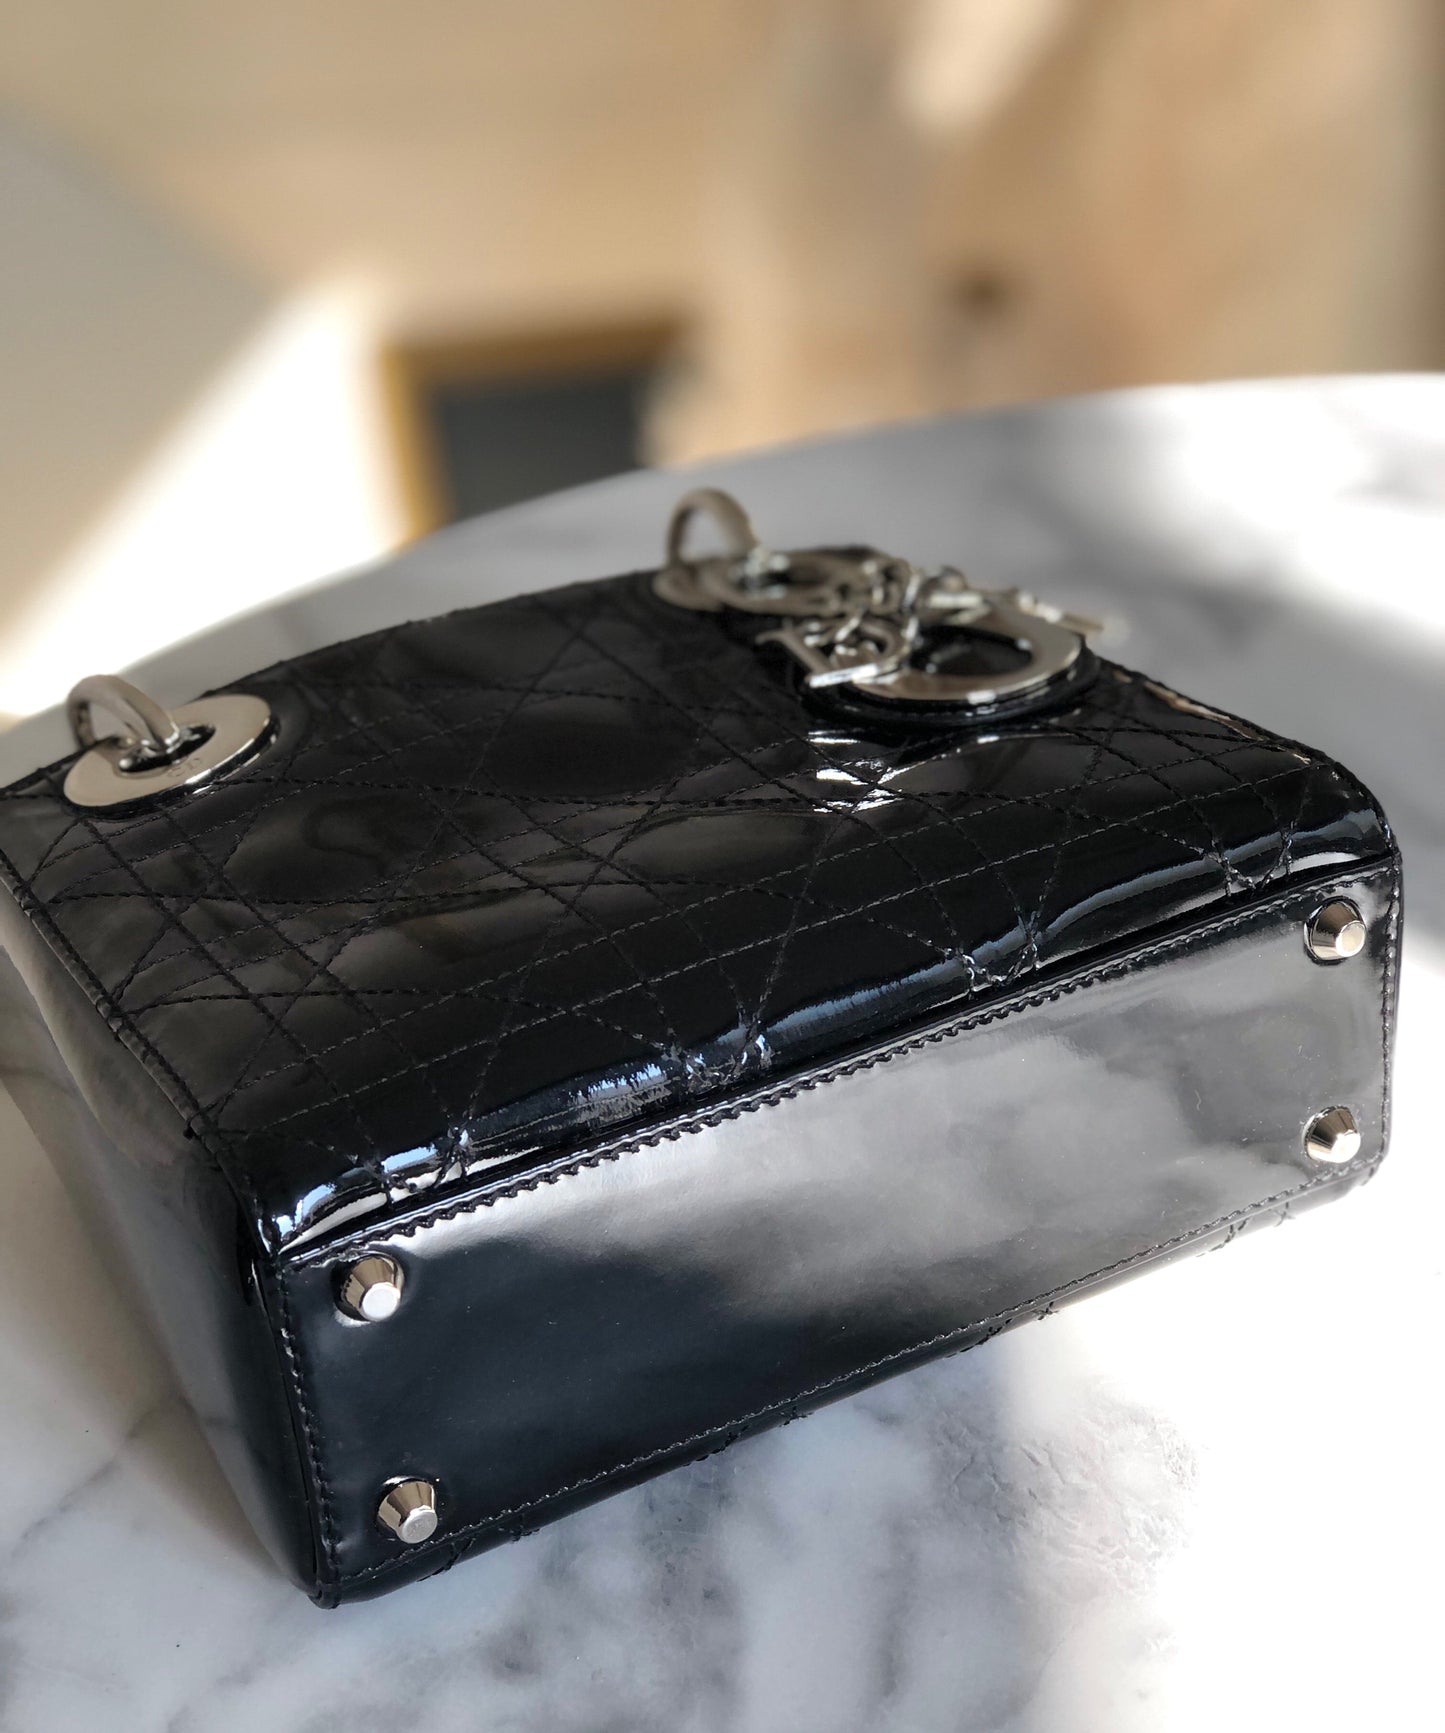 Christian Dior Cannage Lady dior Patent leather Handbag Shoulder bag Black e3i7xj